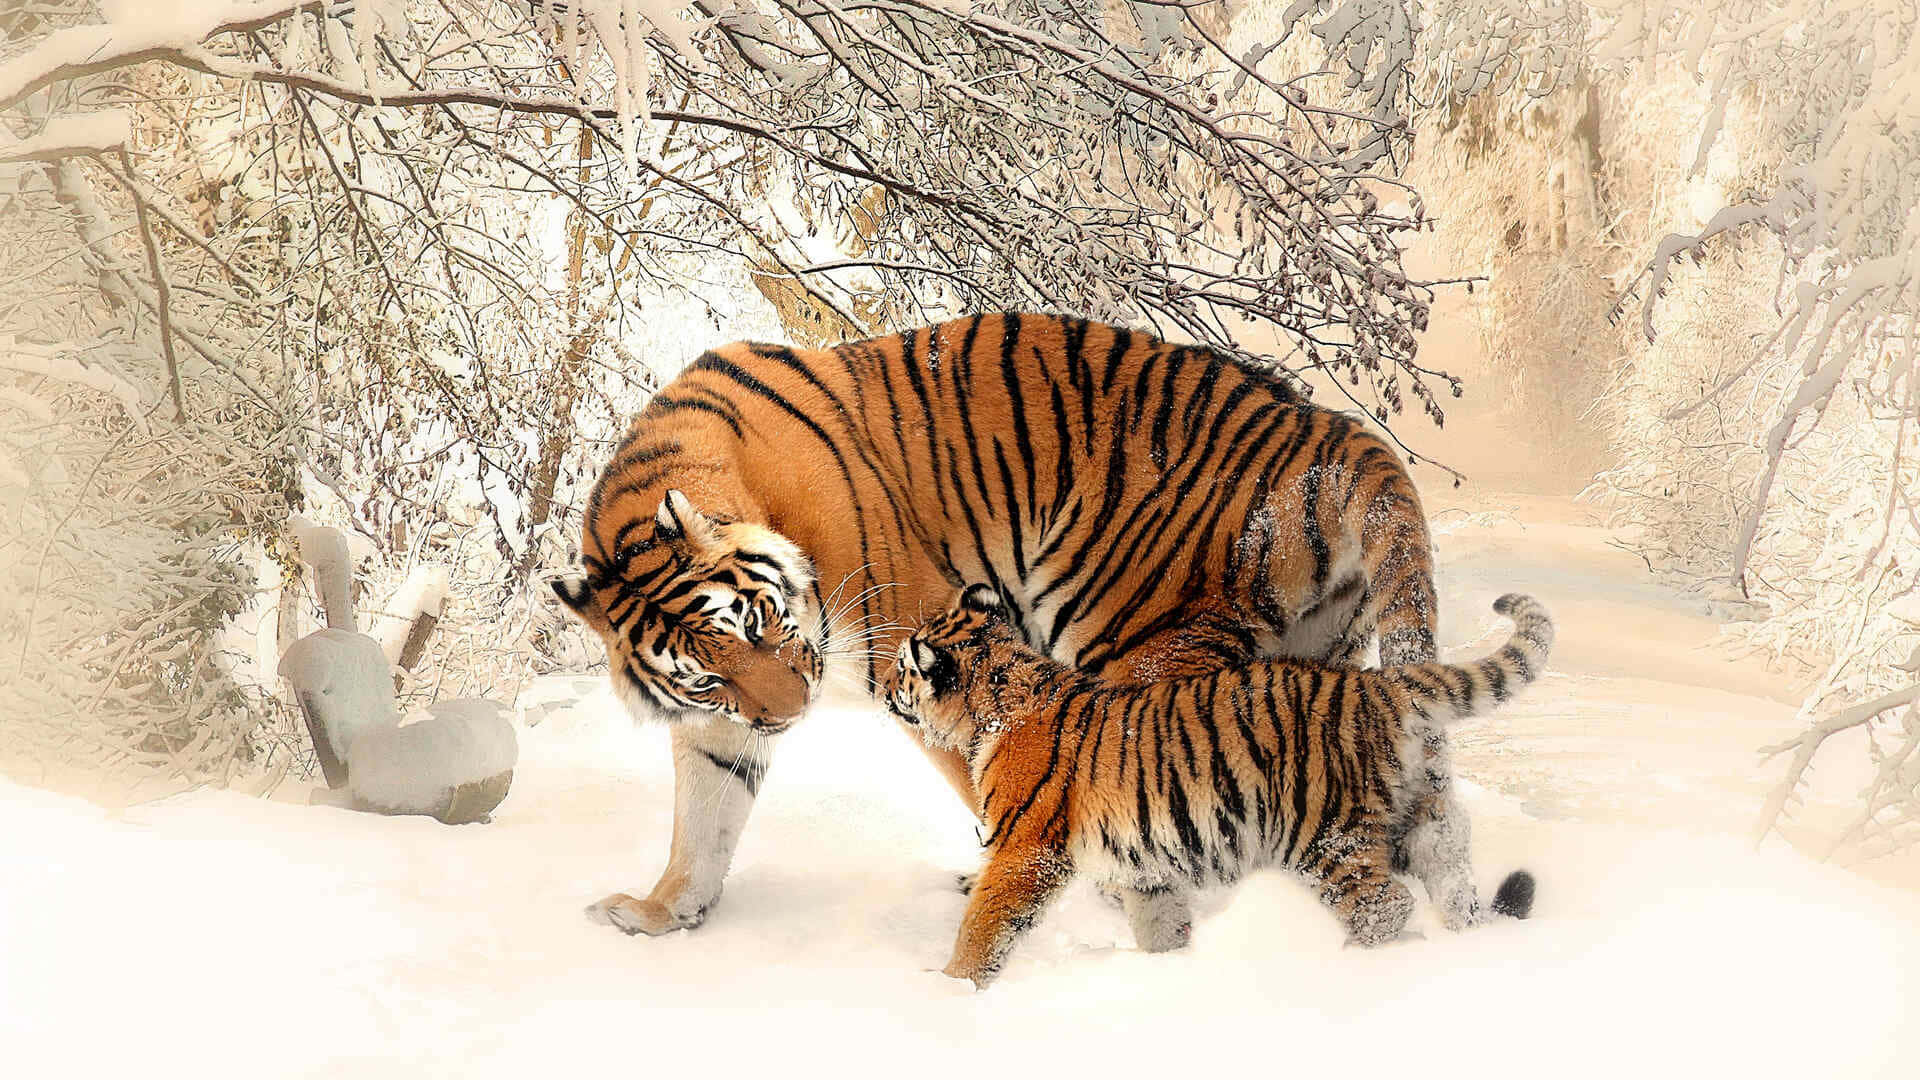 Siberian Tigersin Snowy Habitat Wallpaper